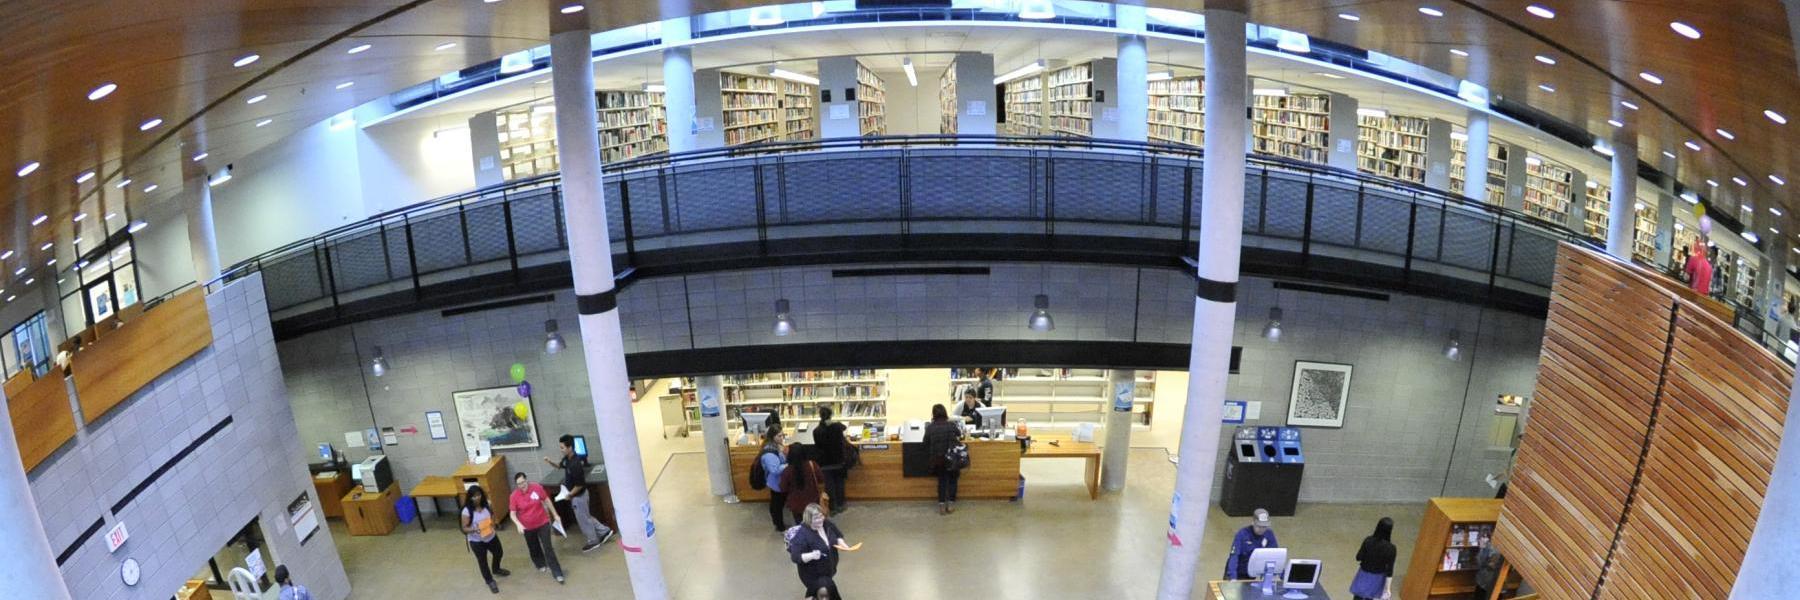 UTSC library